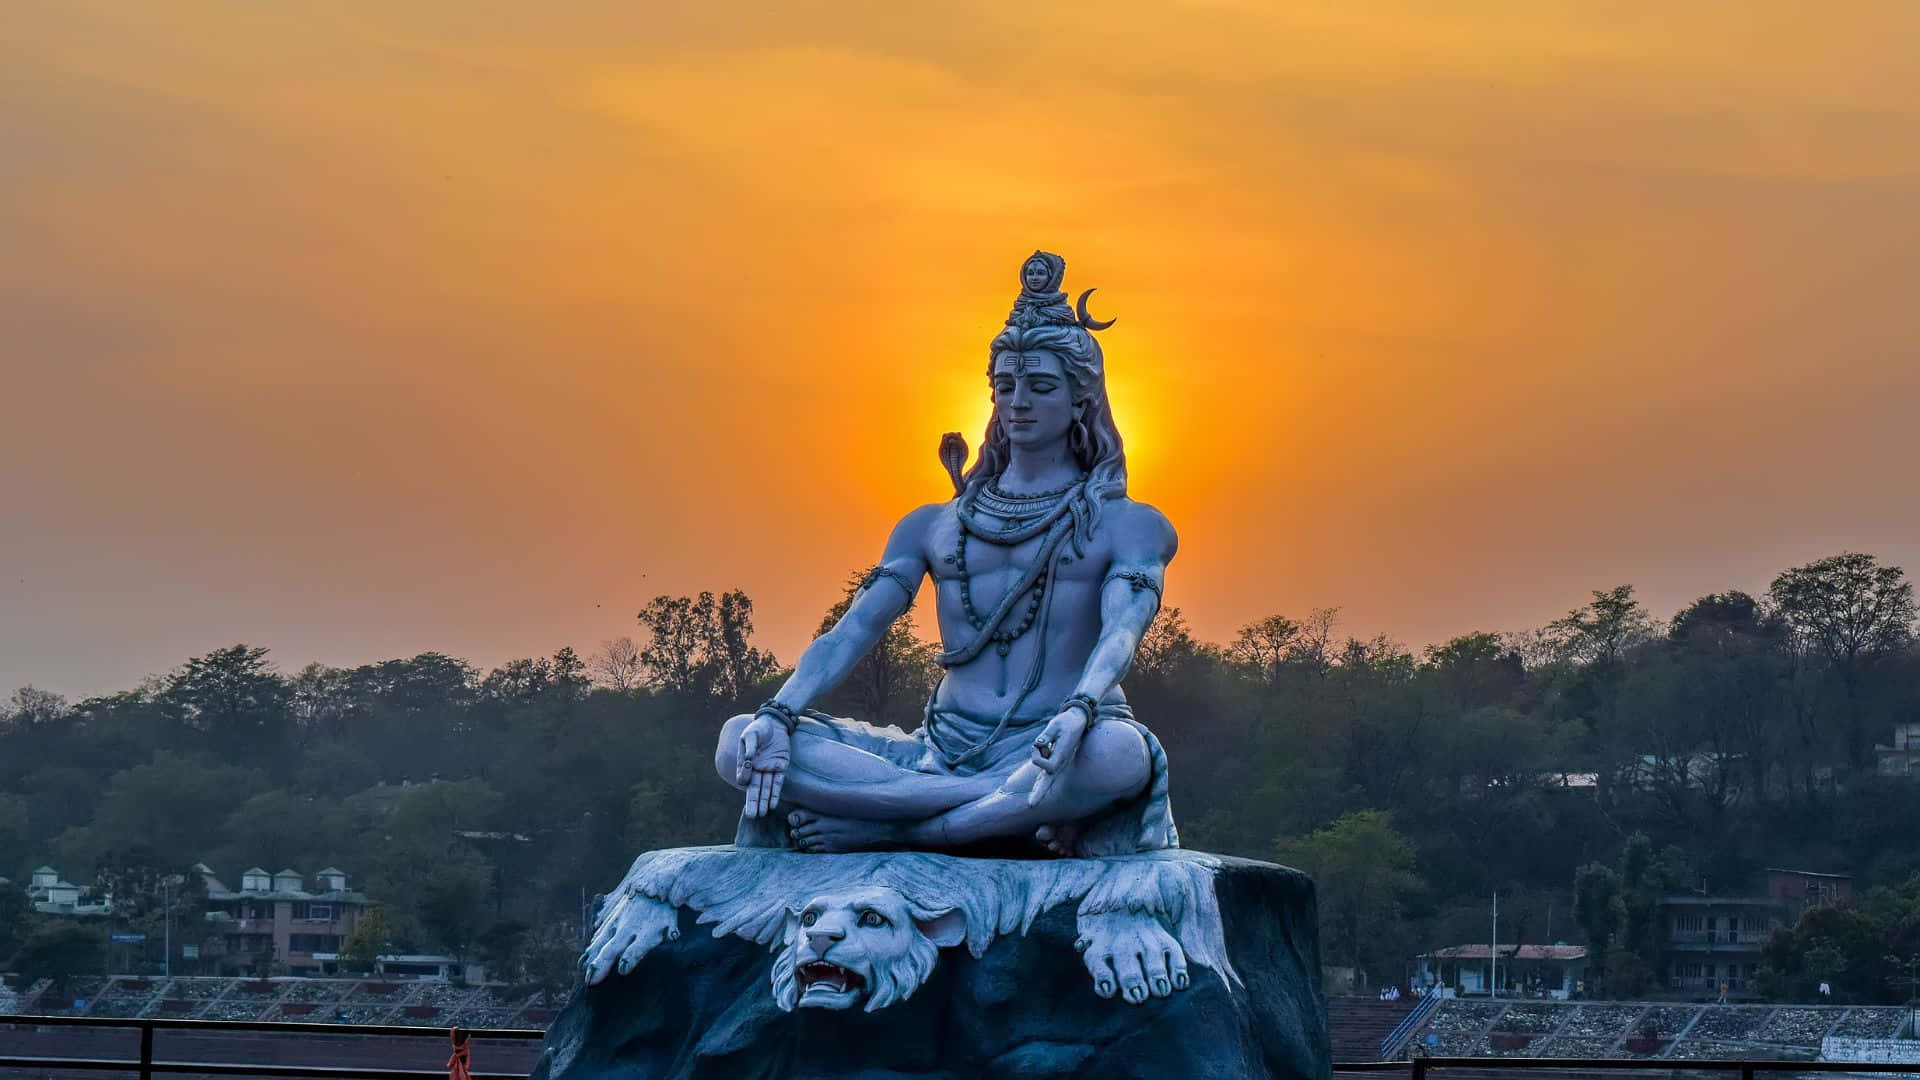 Image  Lord Shiva in cosmic balance